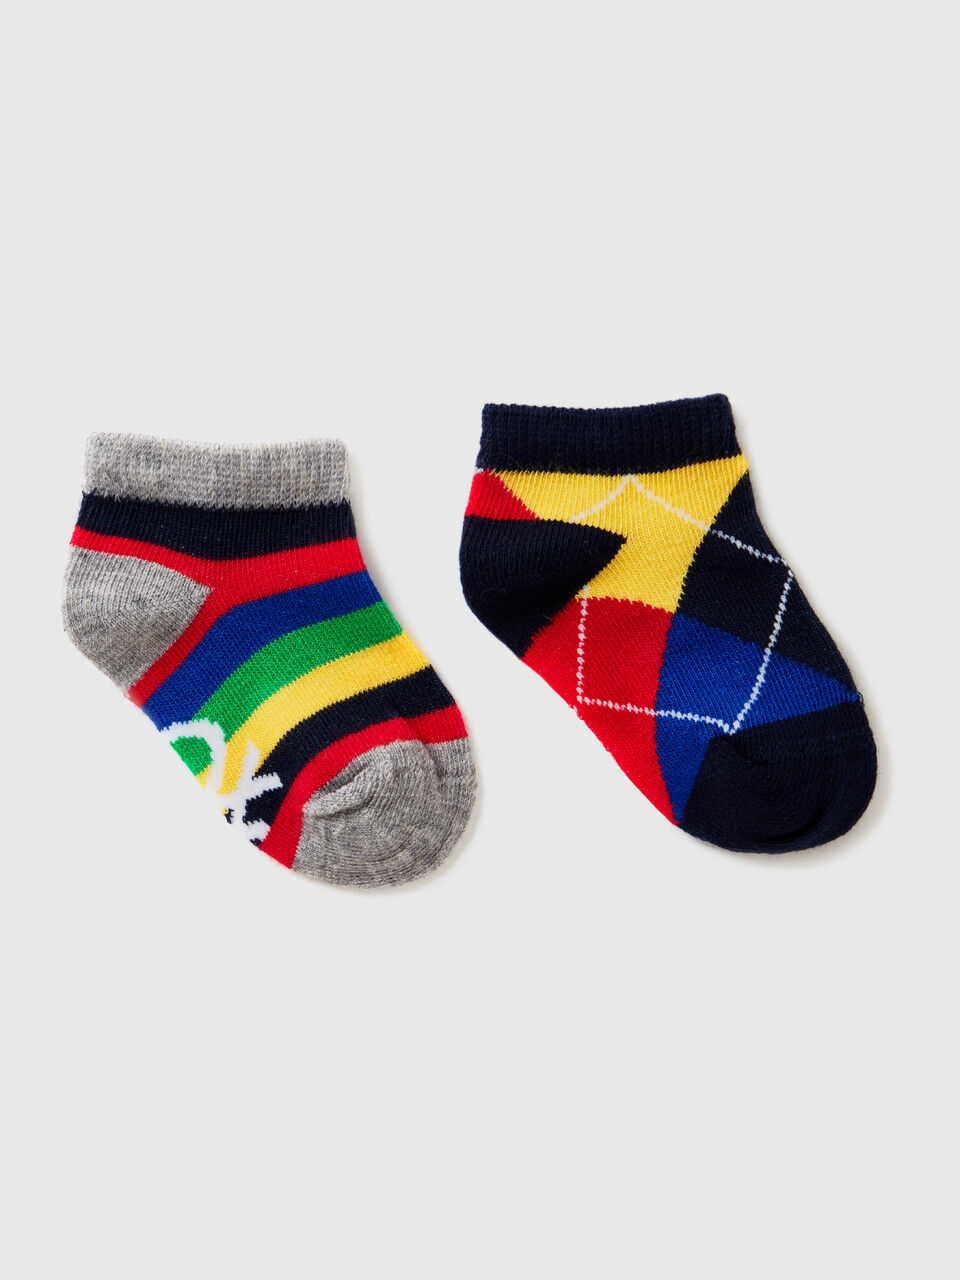 Two short jacquard socks